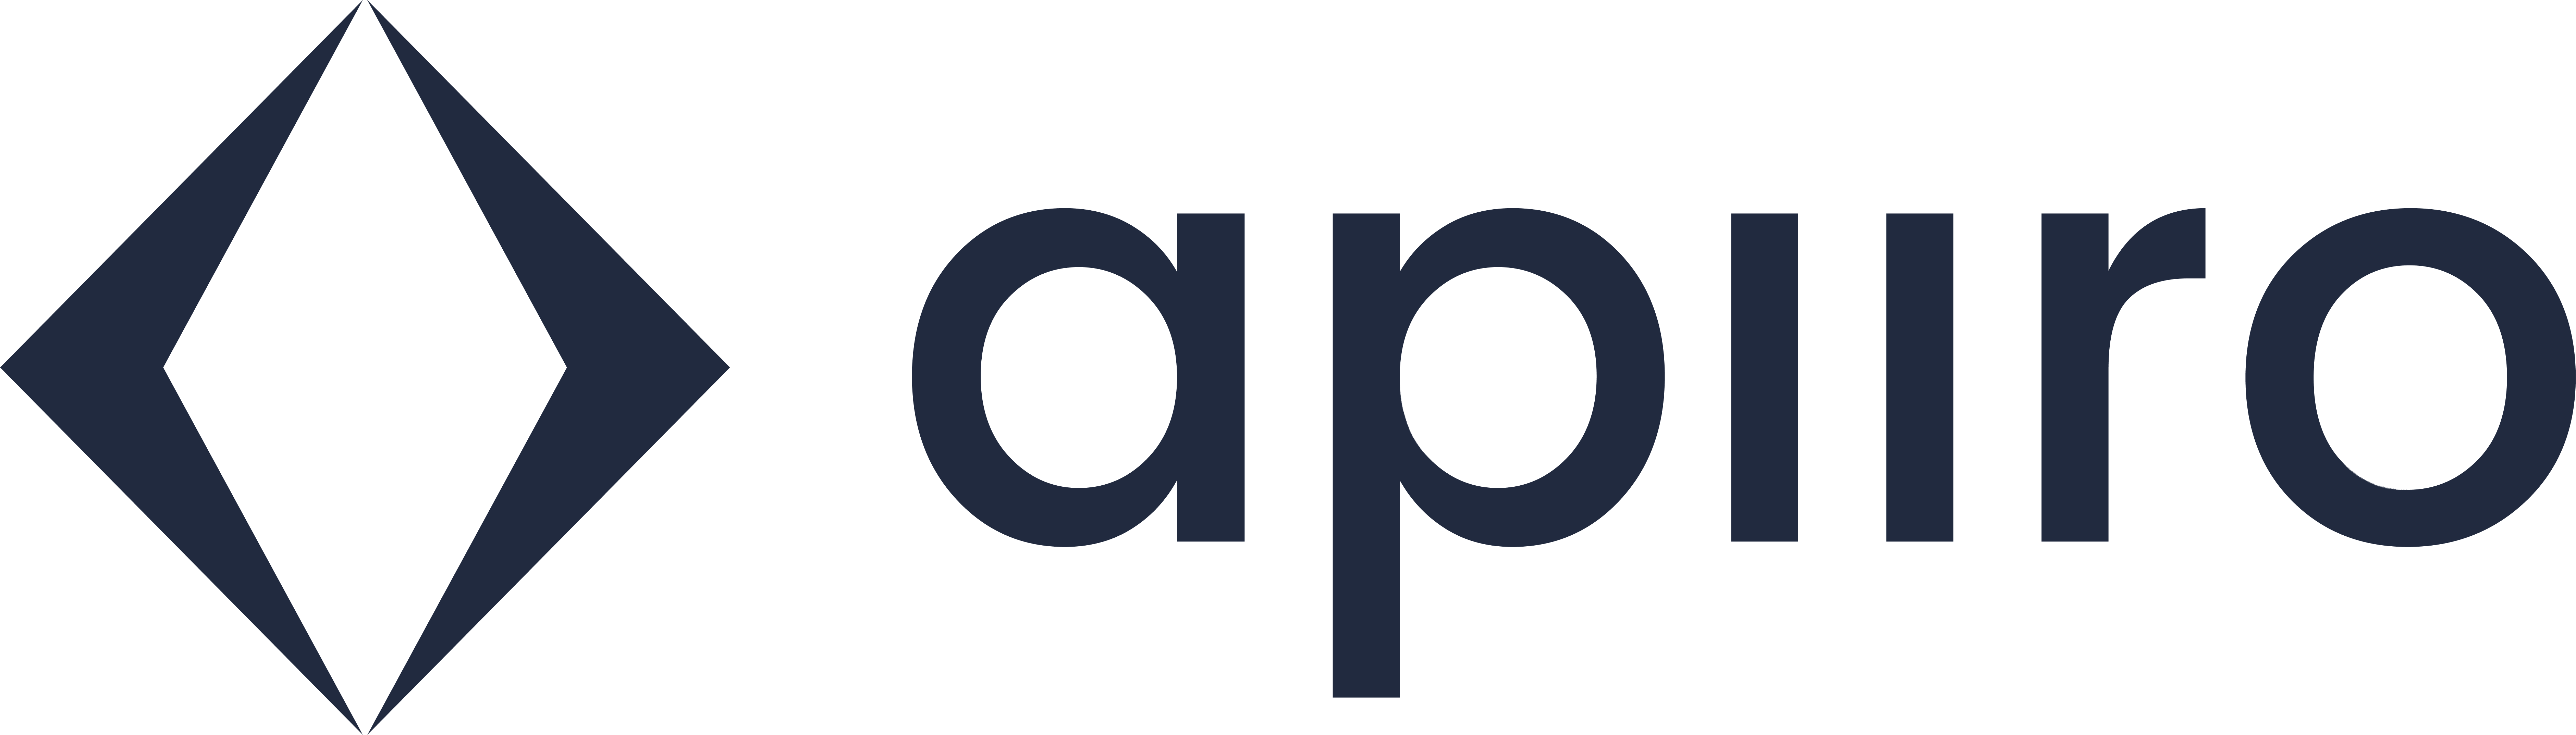 Apiiro Logo high res.png